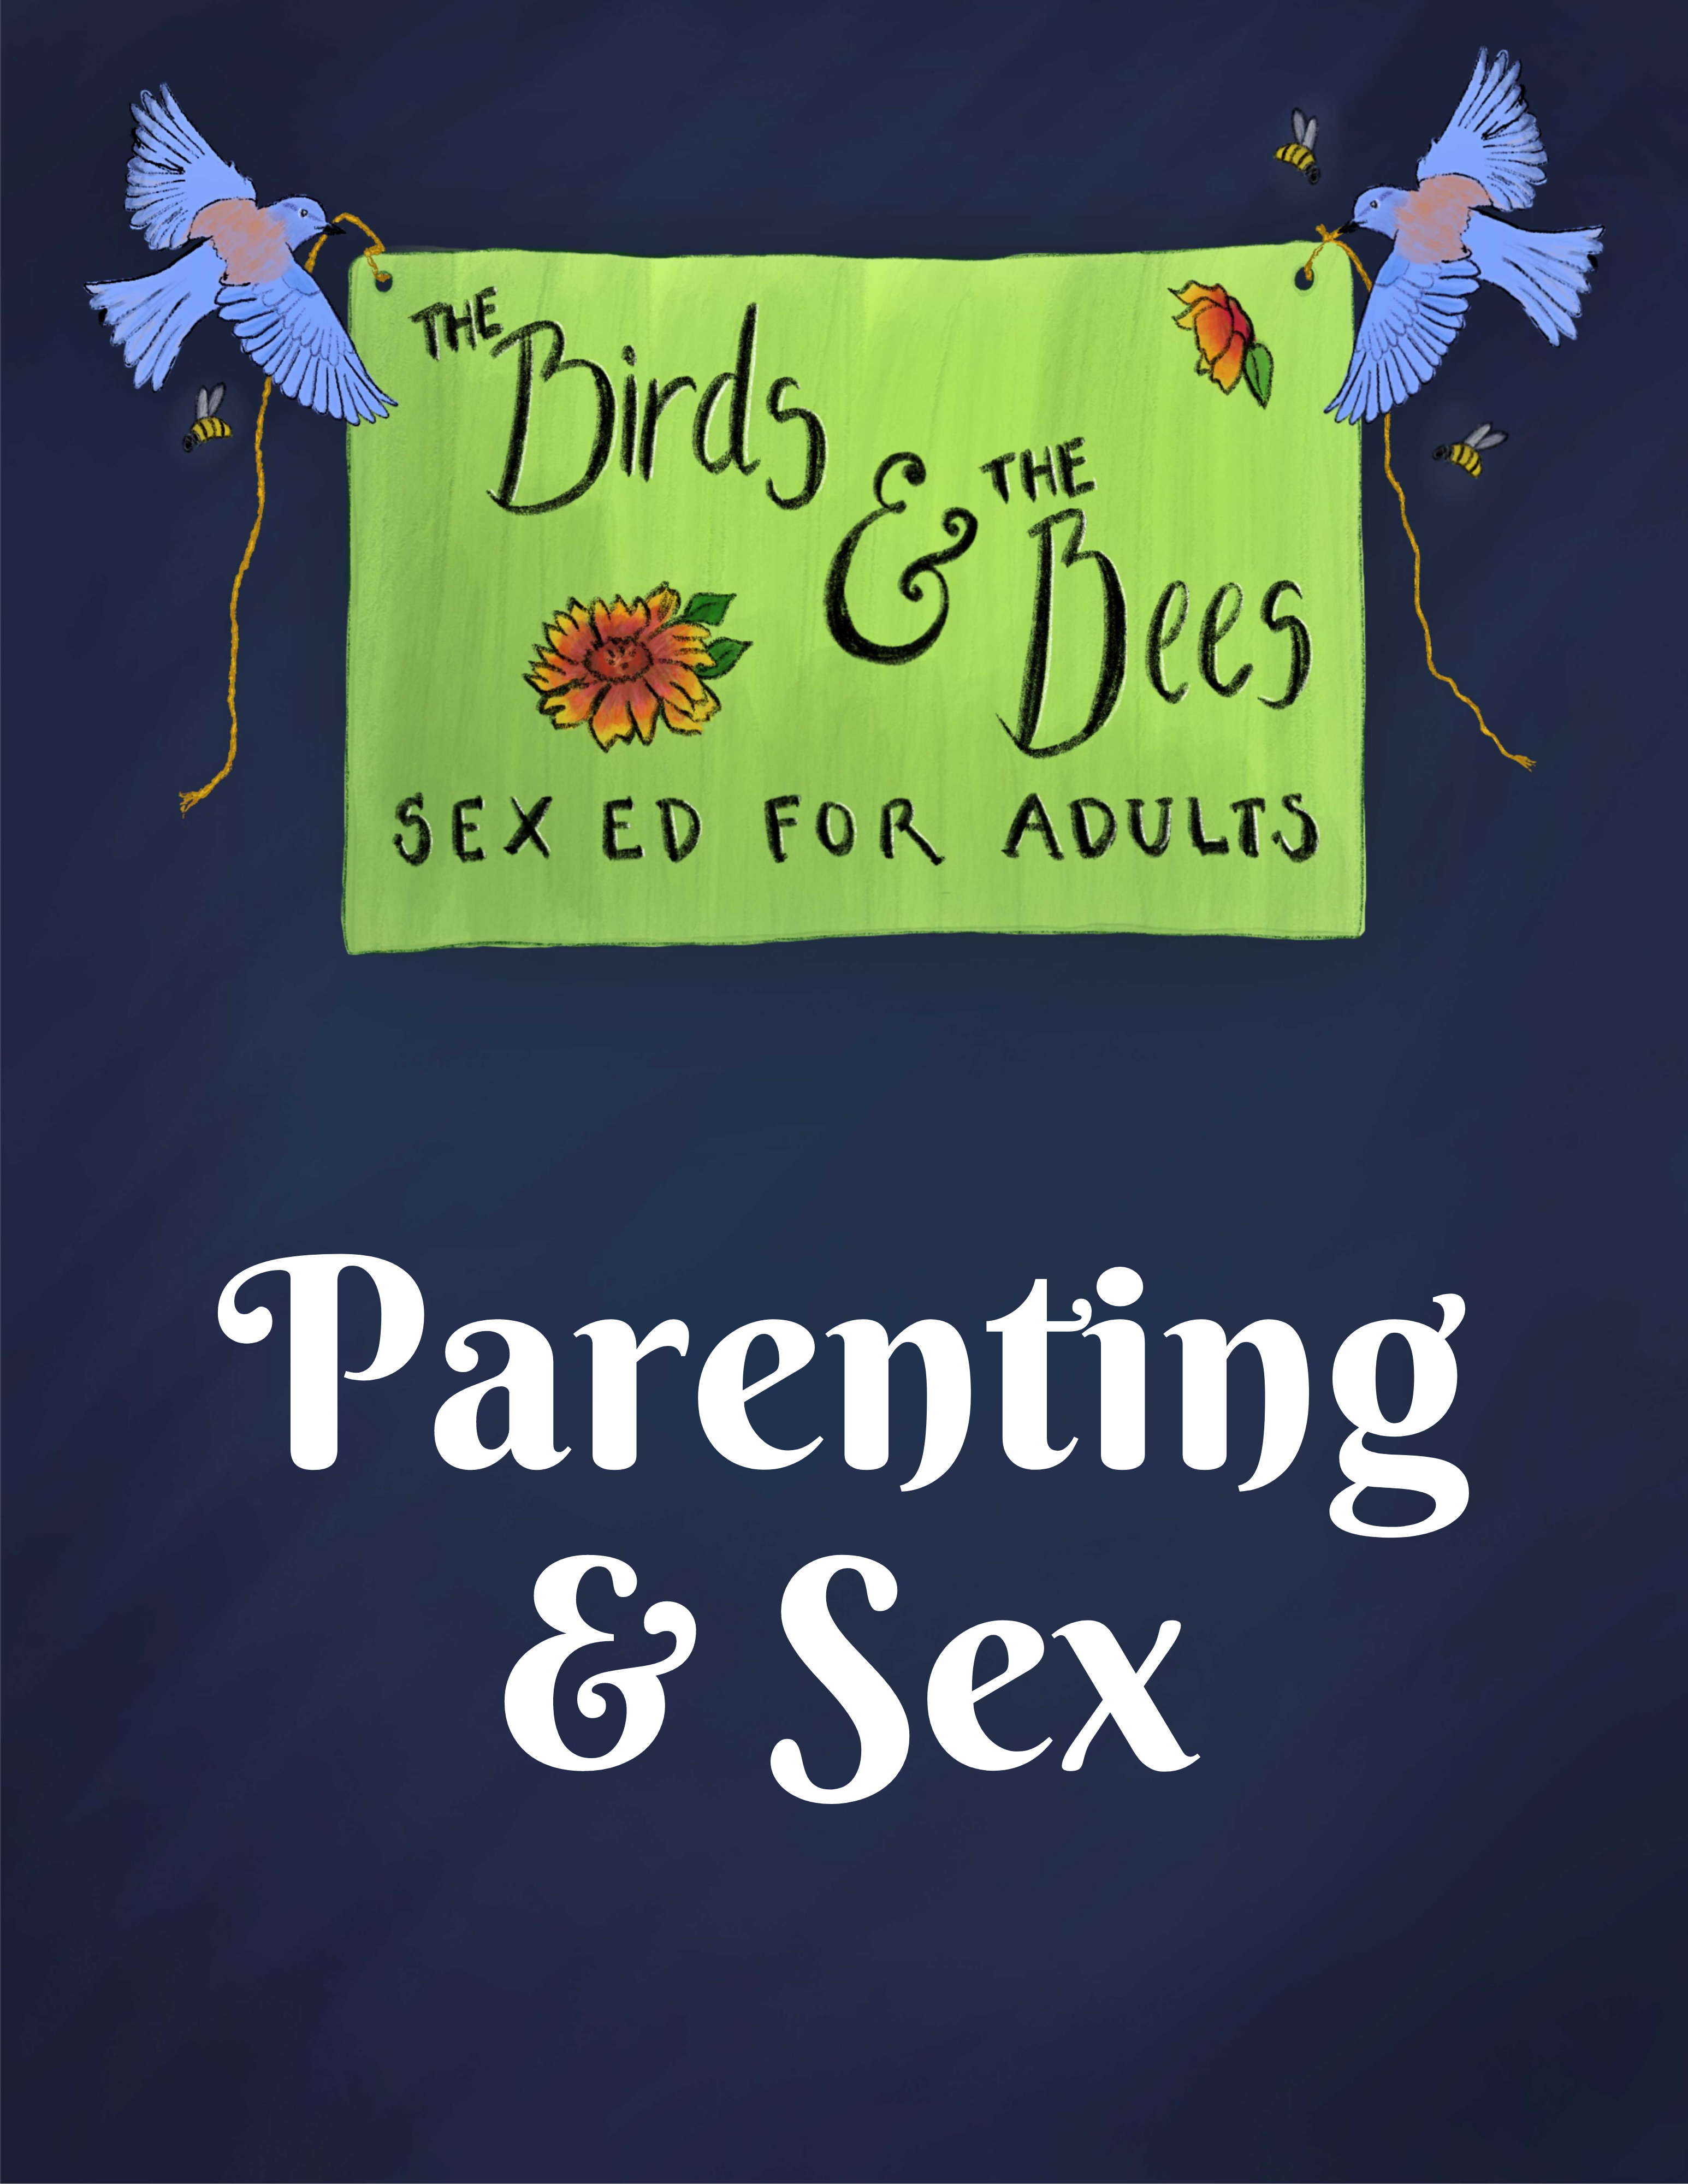 Birds & Bees: Parenting & Sex